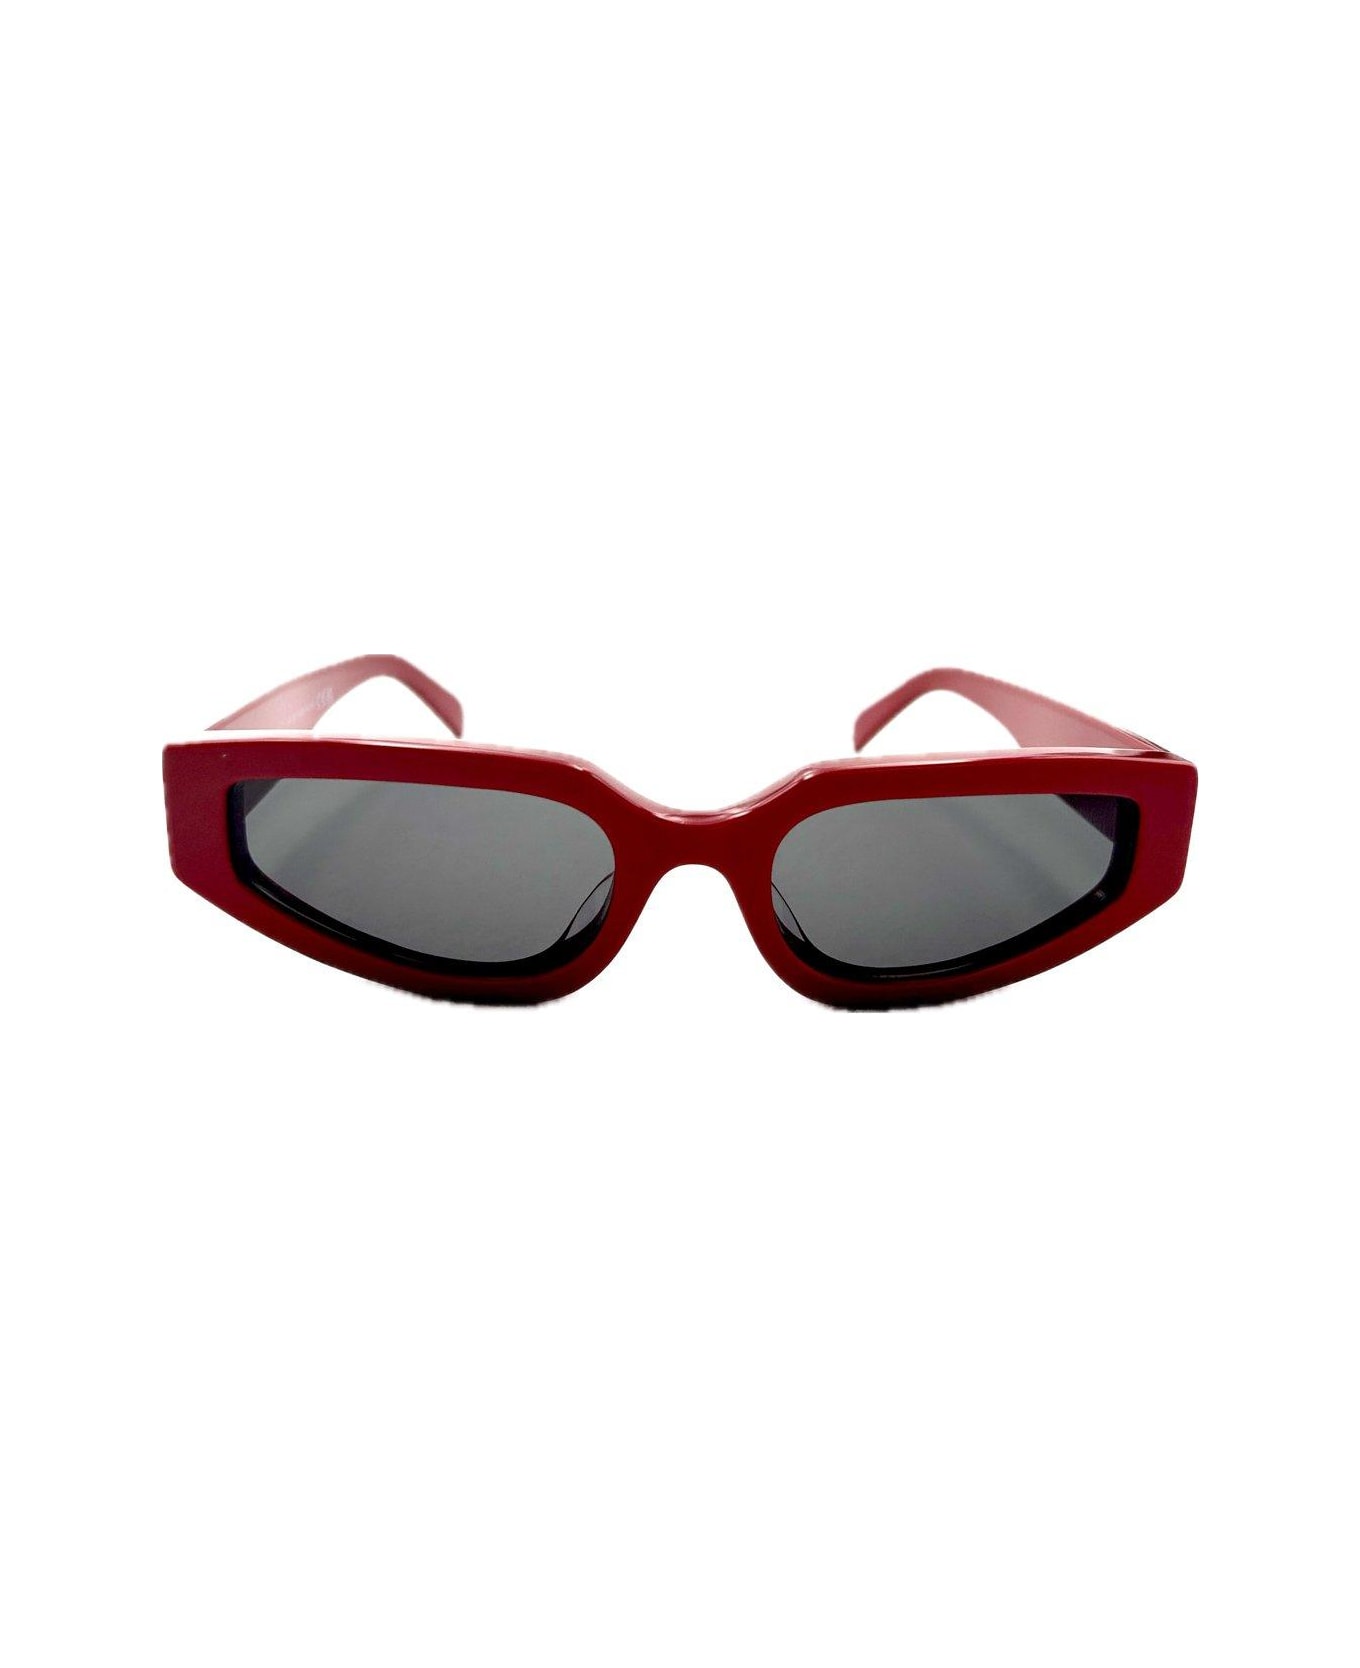 Celine Rectangle Framed Sunglasses - 66a サングラス